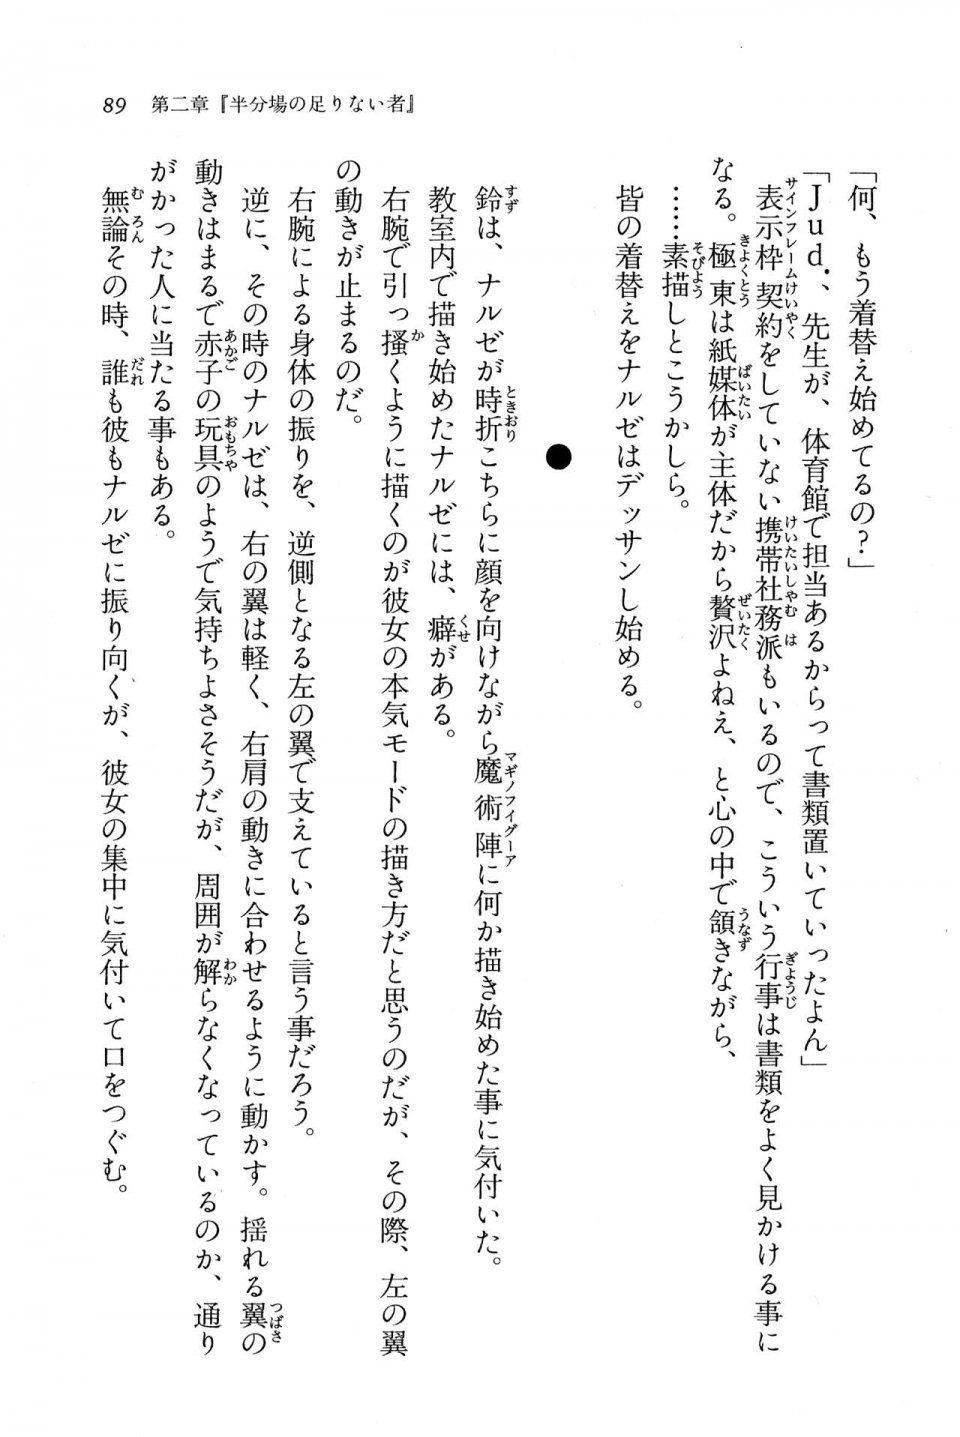 Kyoukai Senjou no Horizon BD Special Mininovel Vol 5(3A) - Photo #93